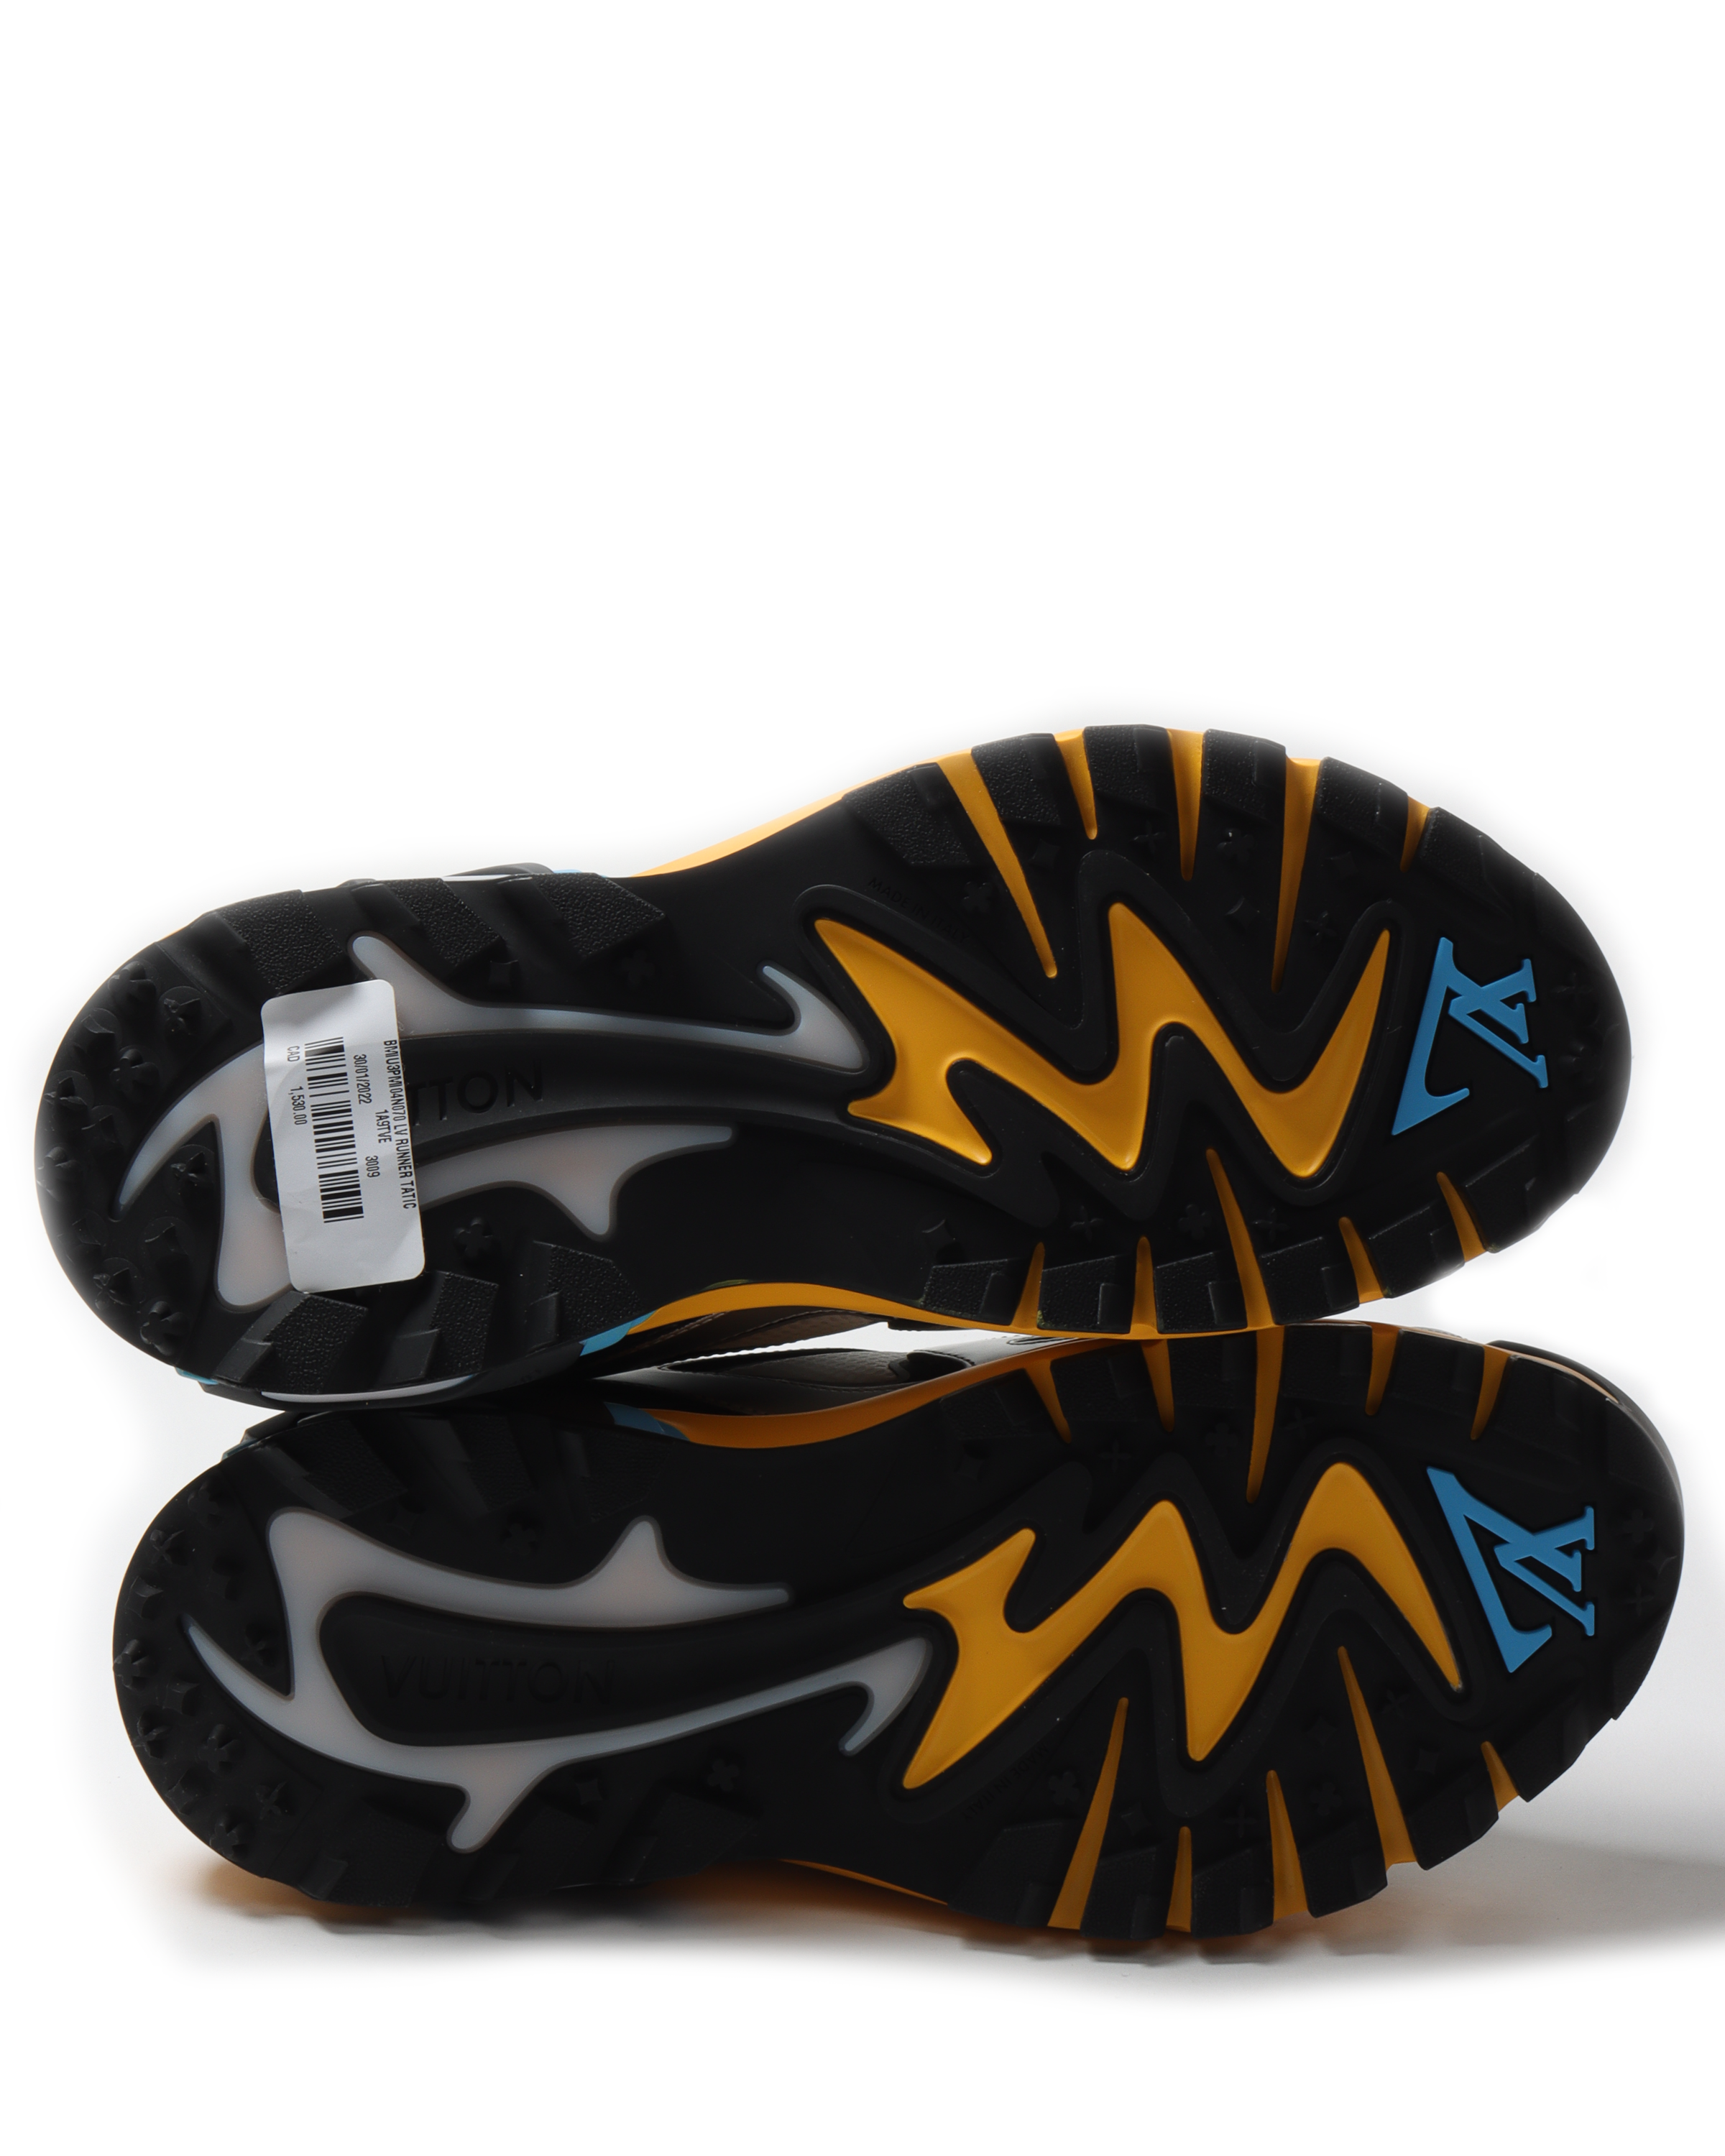 LOUIS VUITTON LV Runner Tatic Sneaker Black. Size 9